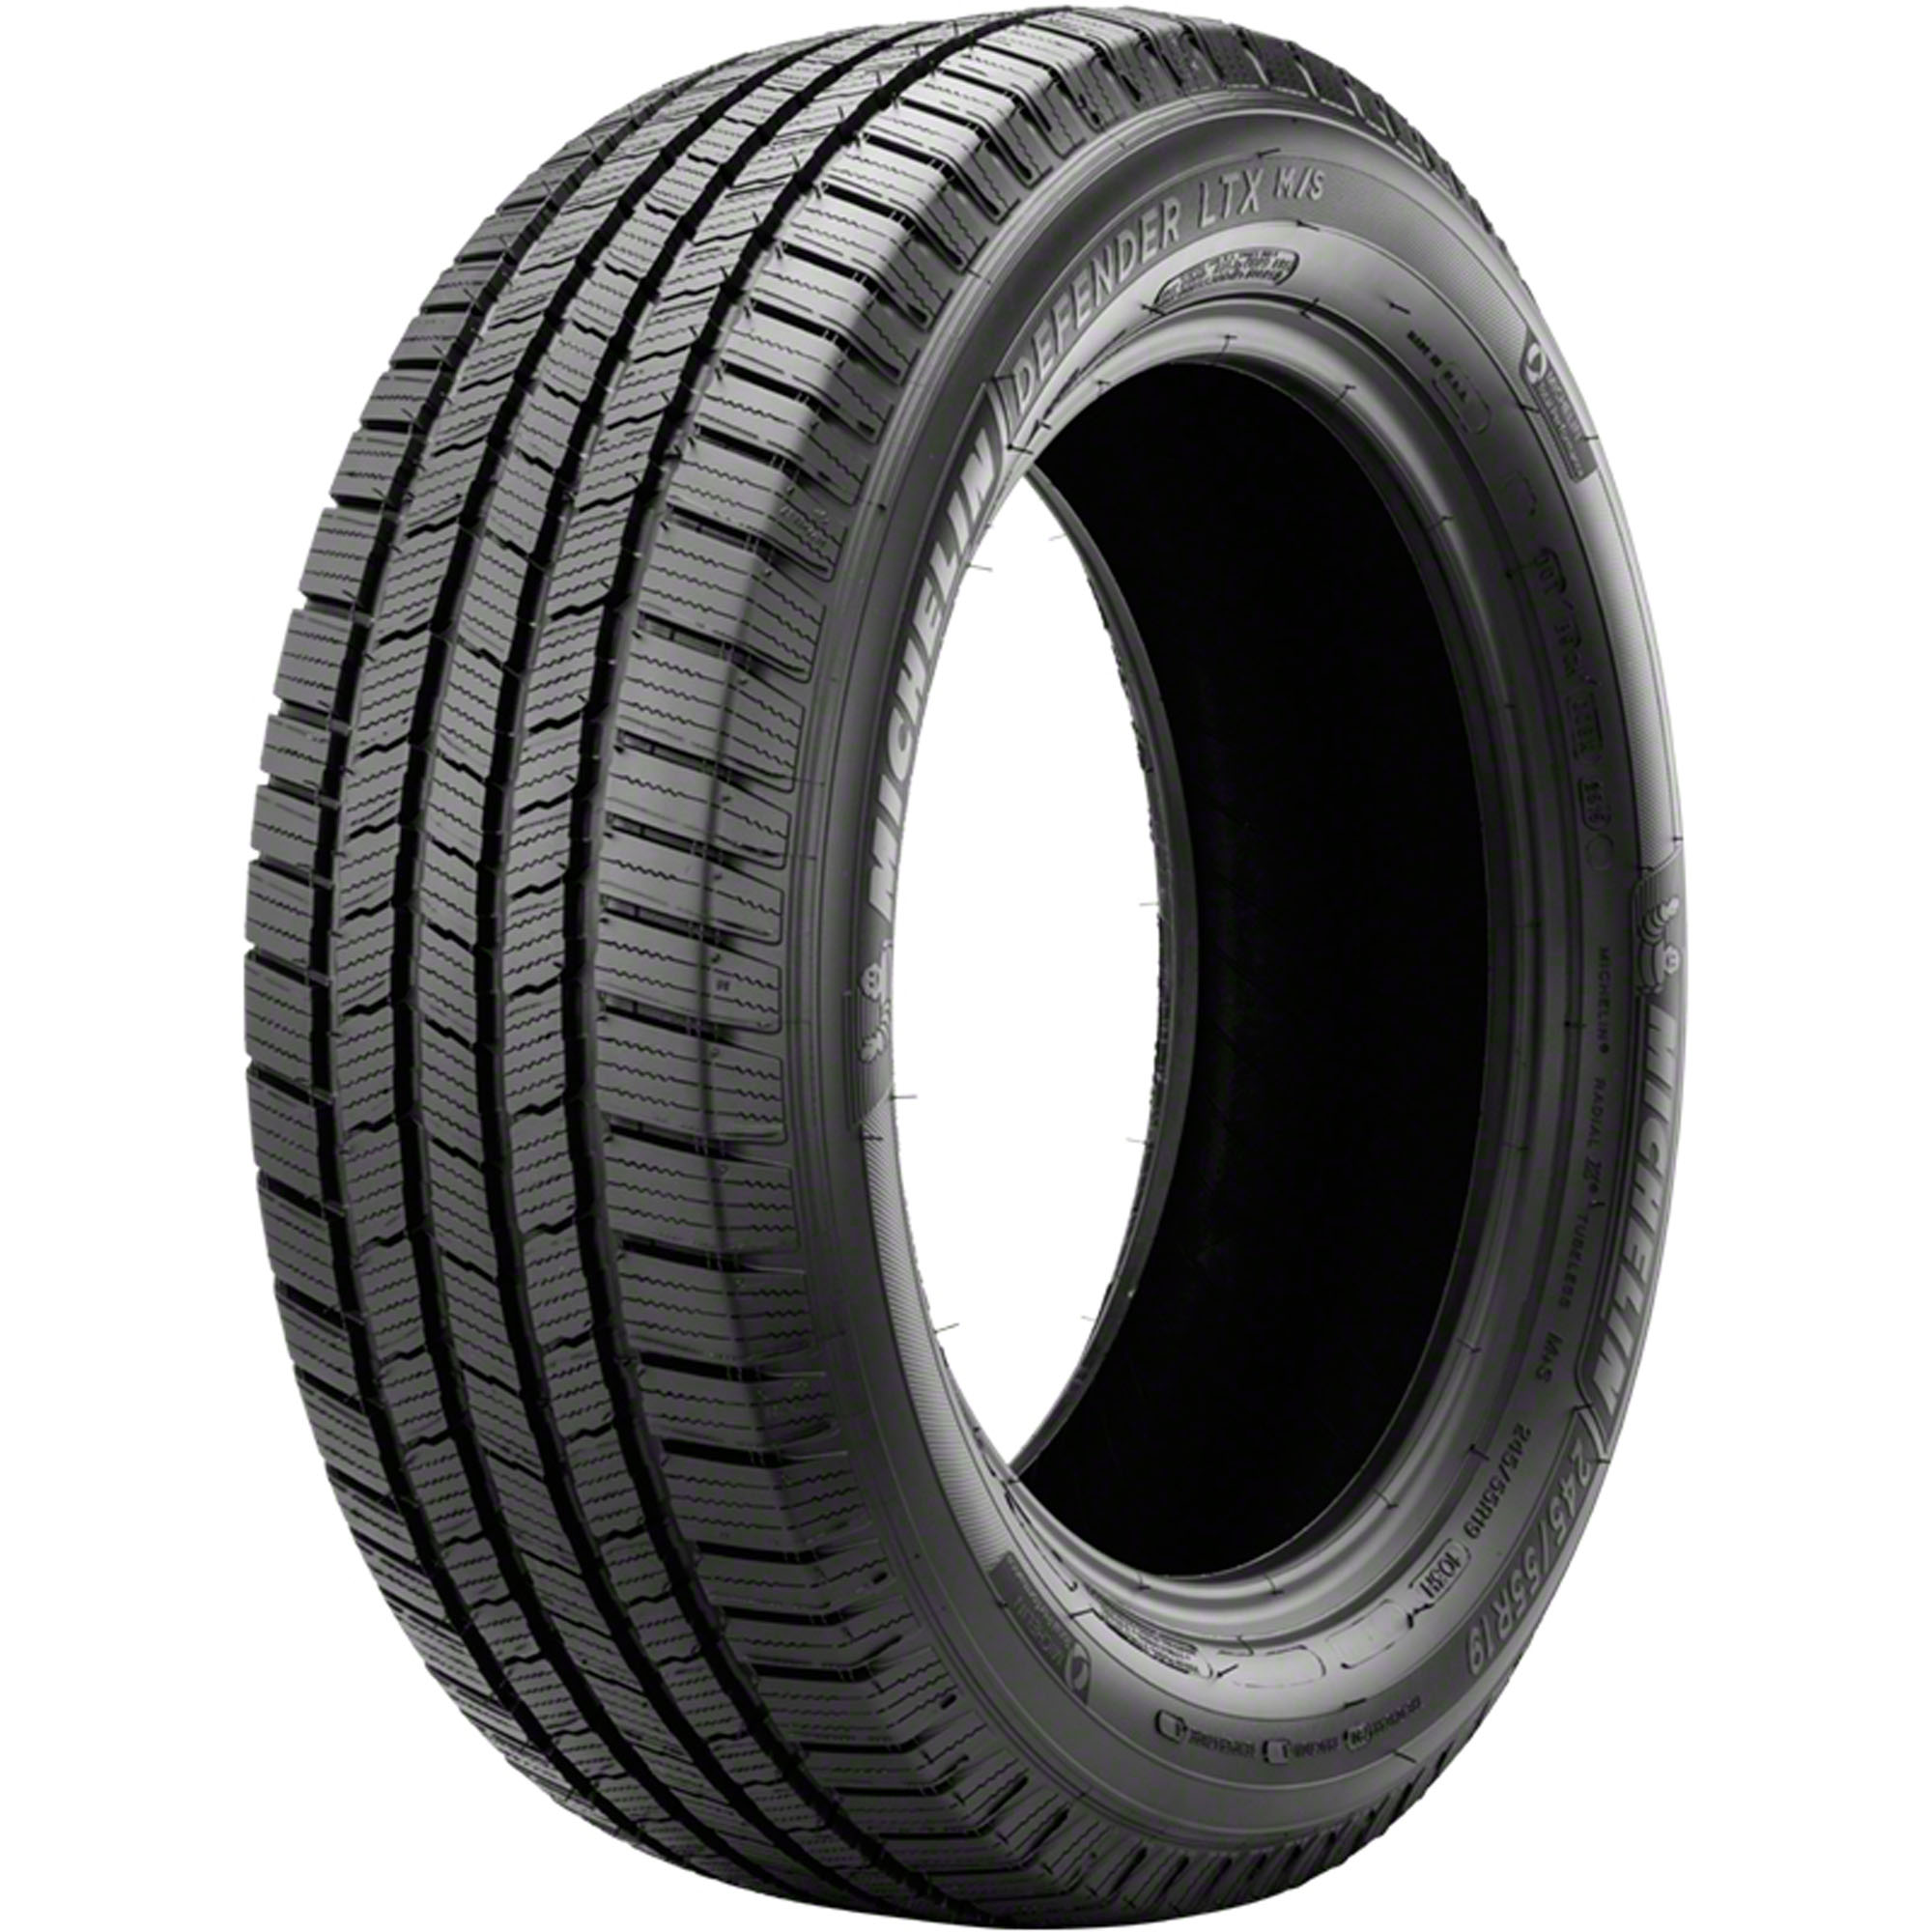 Michelin Defender LTX M/S All Season 245/60R20 107H Light Truck Tire - image 1 of 21